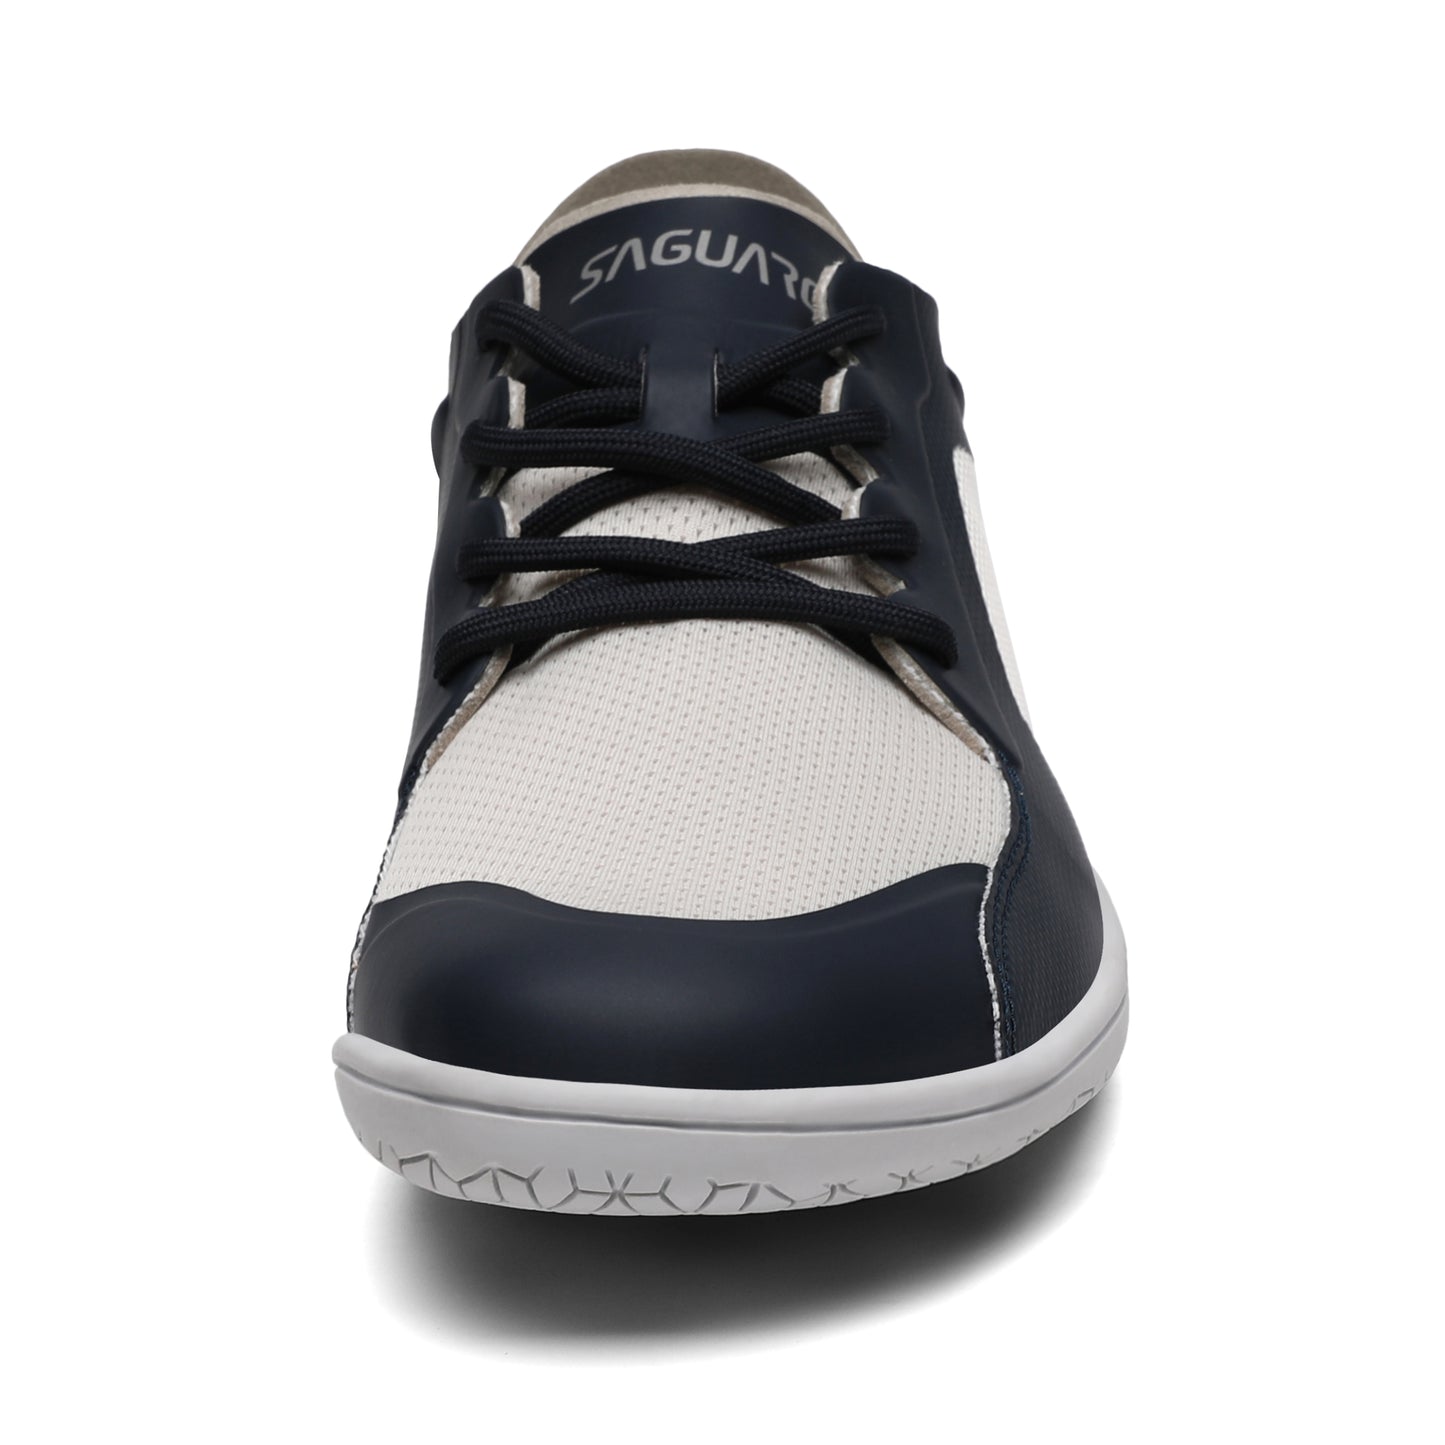 Wish II - Azul y Blanco - Casual Barefoot shoes